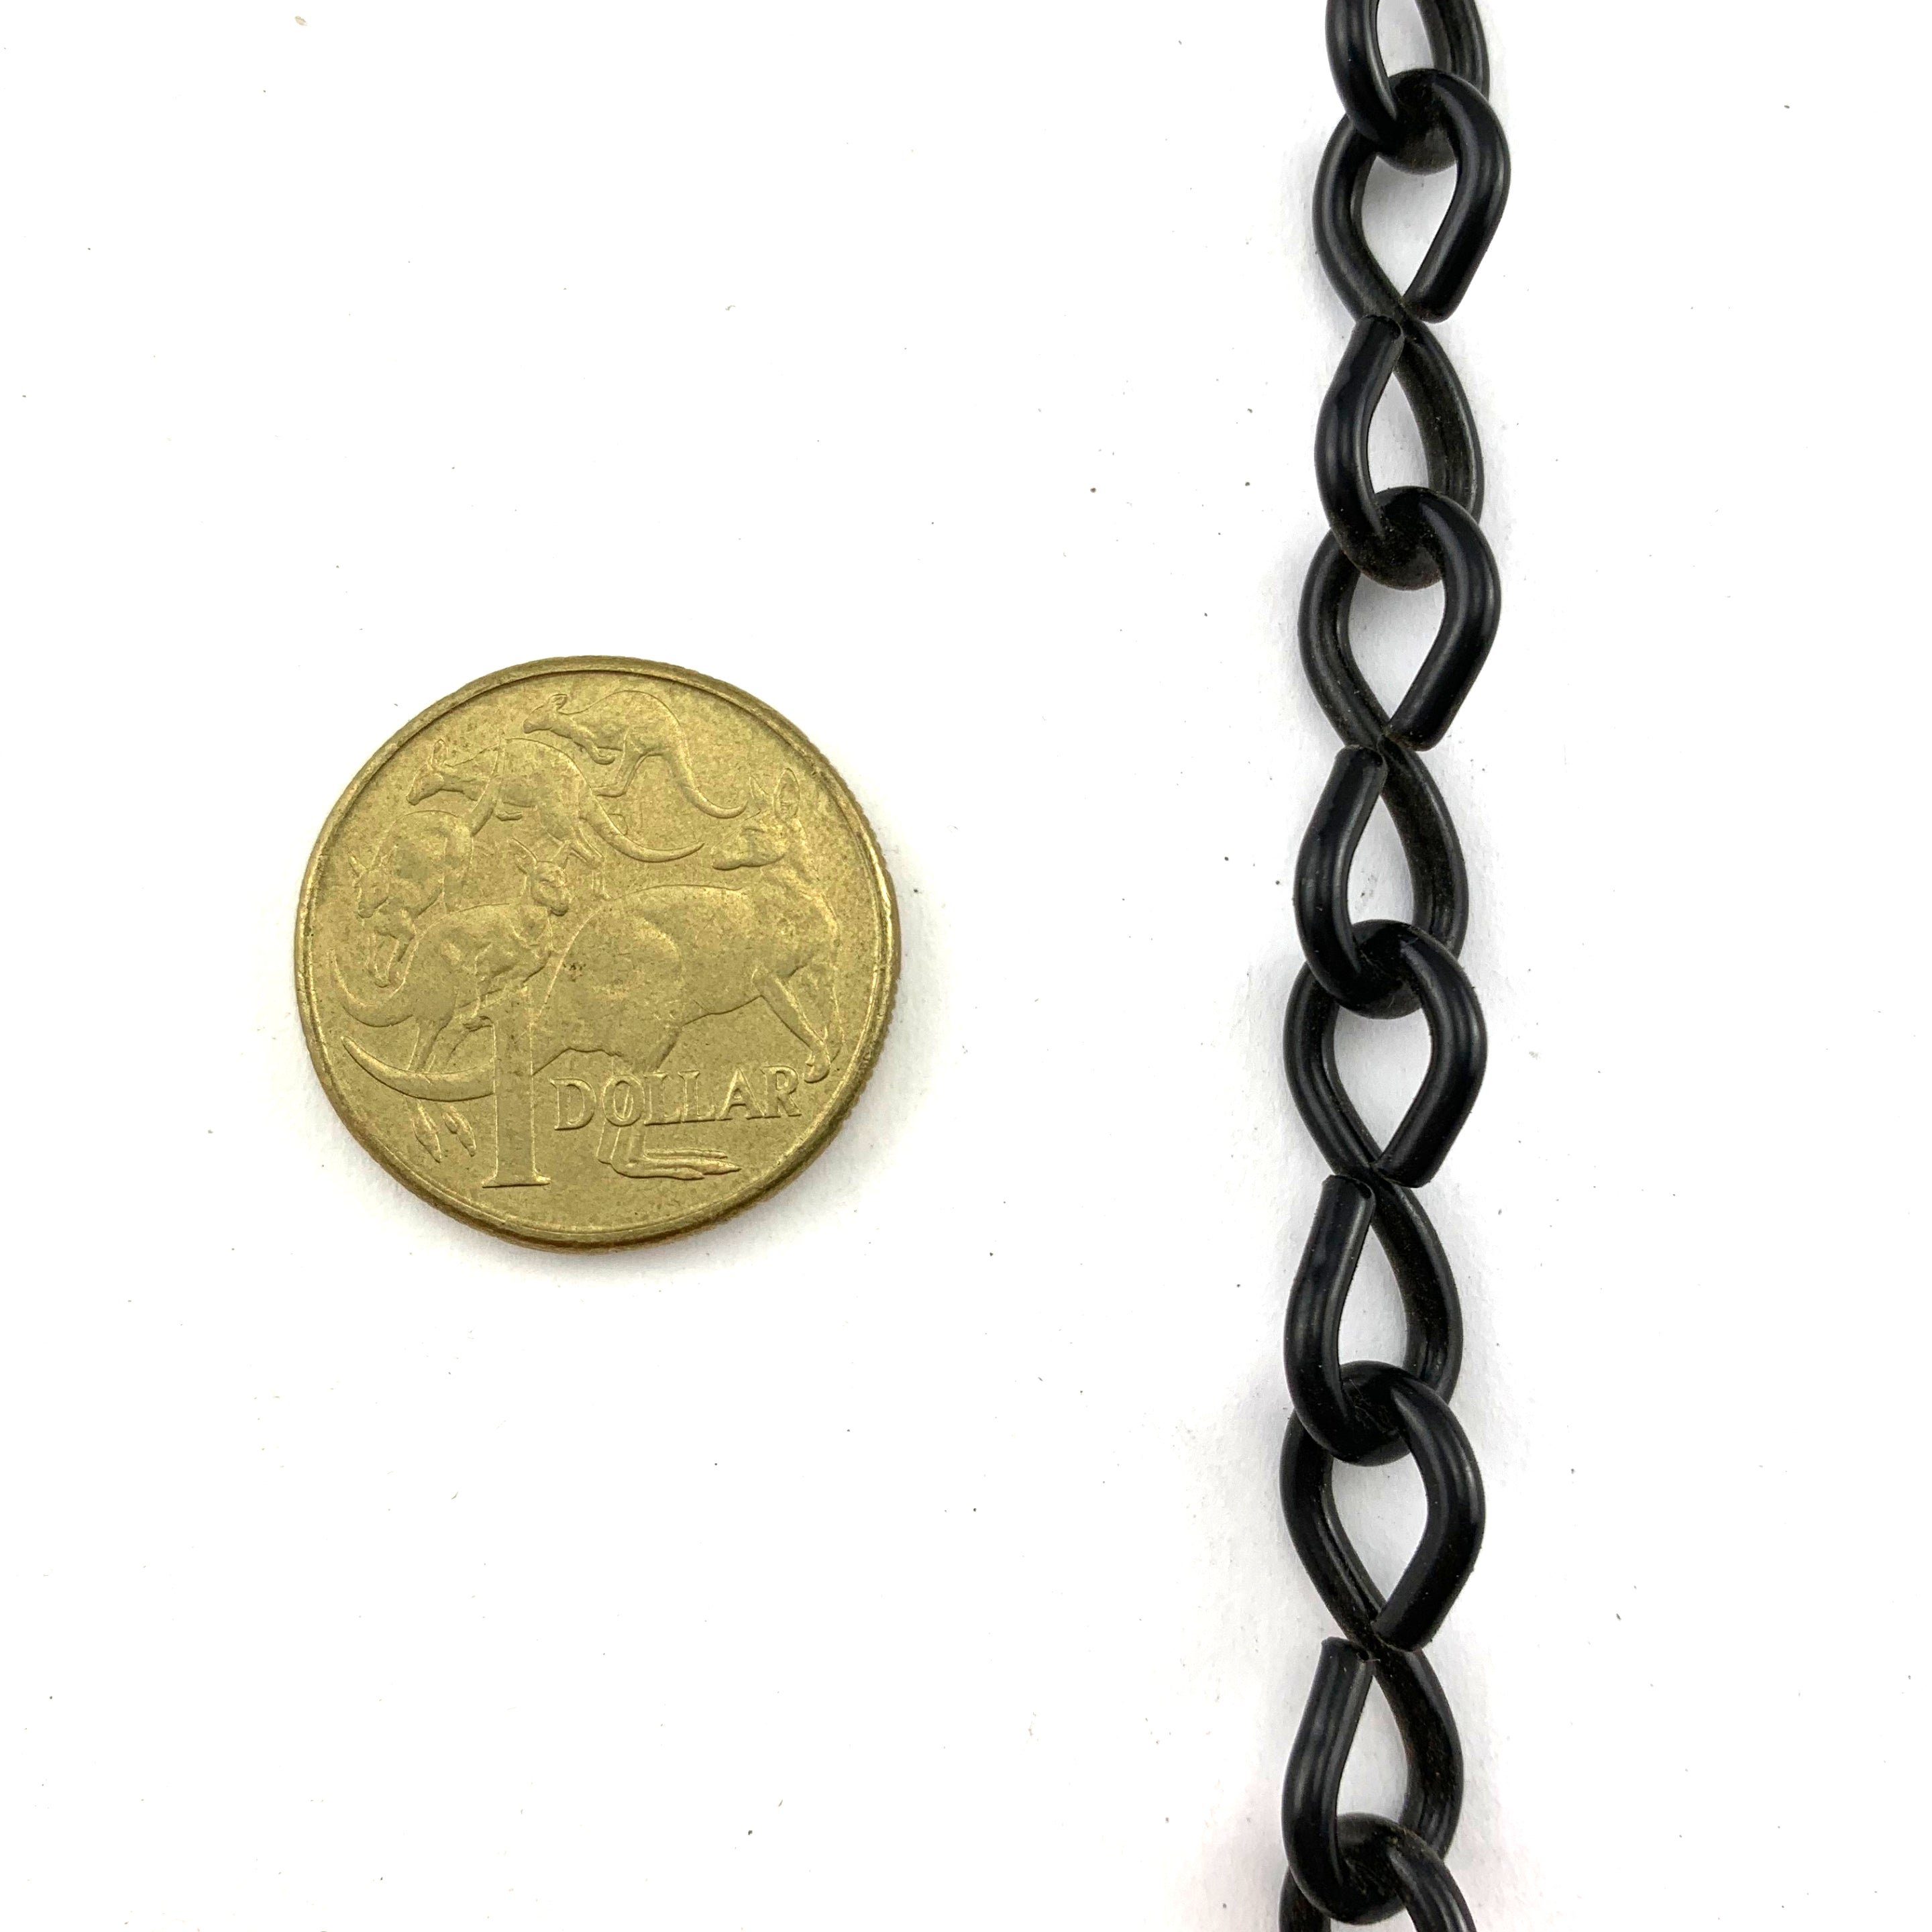 Single Jack Chain in Black, size 2mm, quantity 30m. Australian Made.